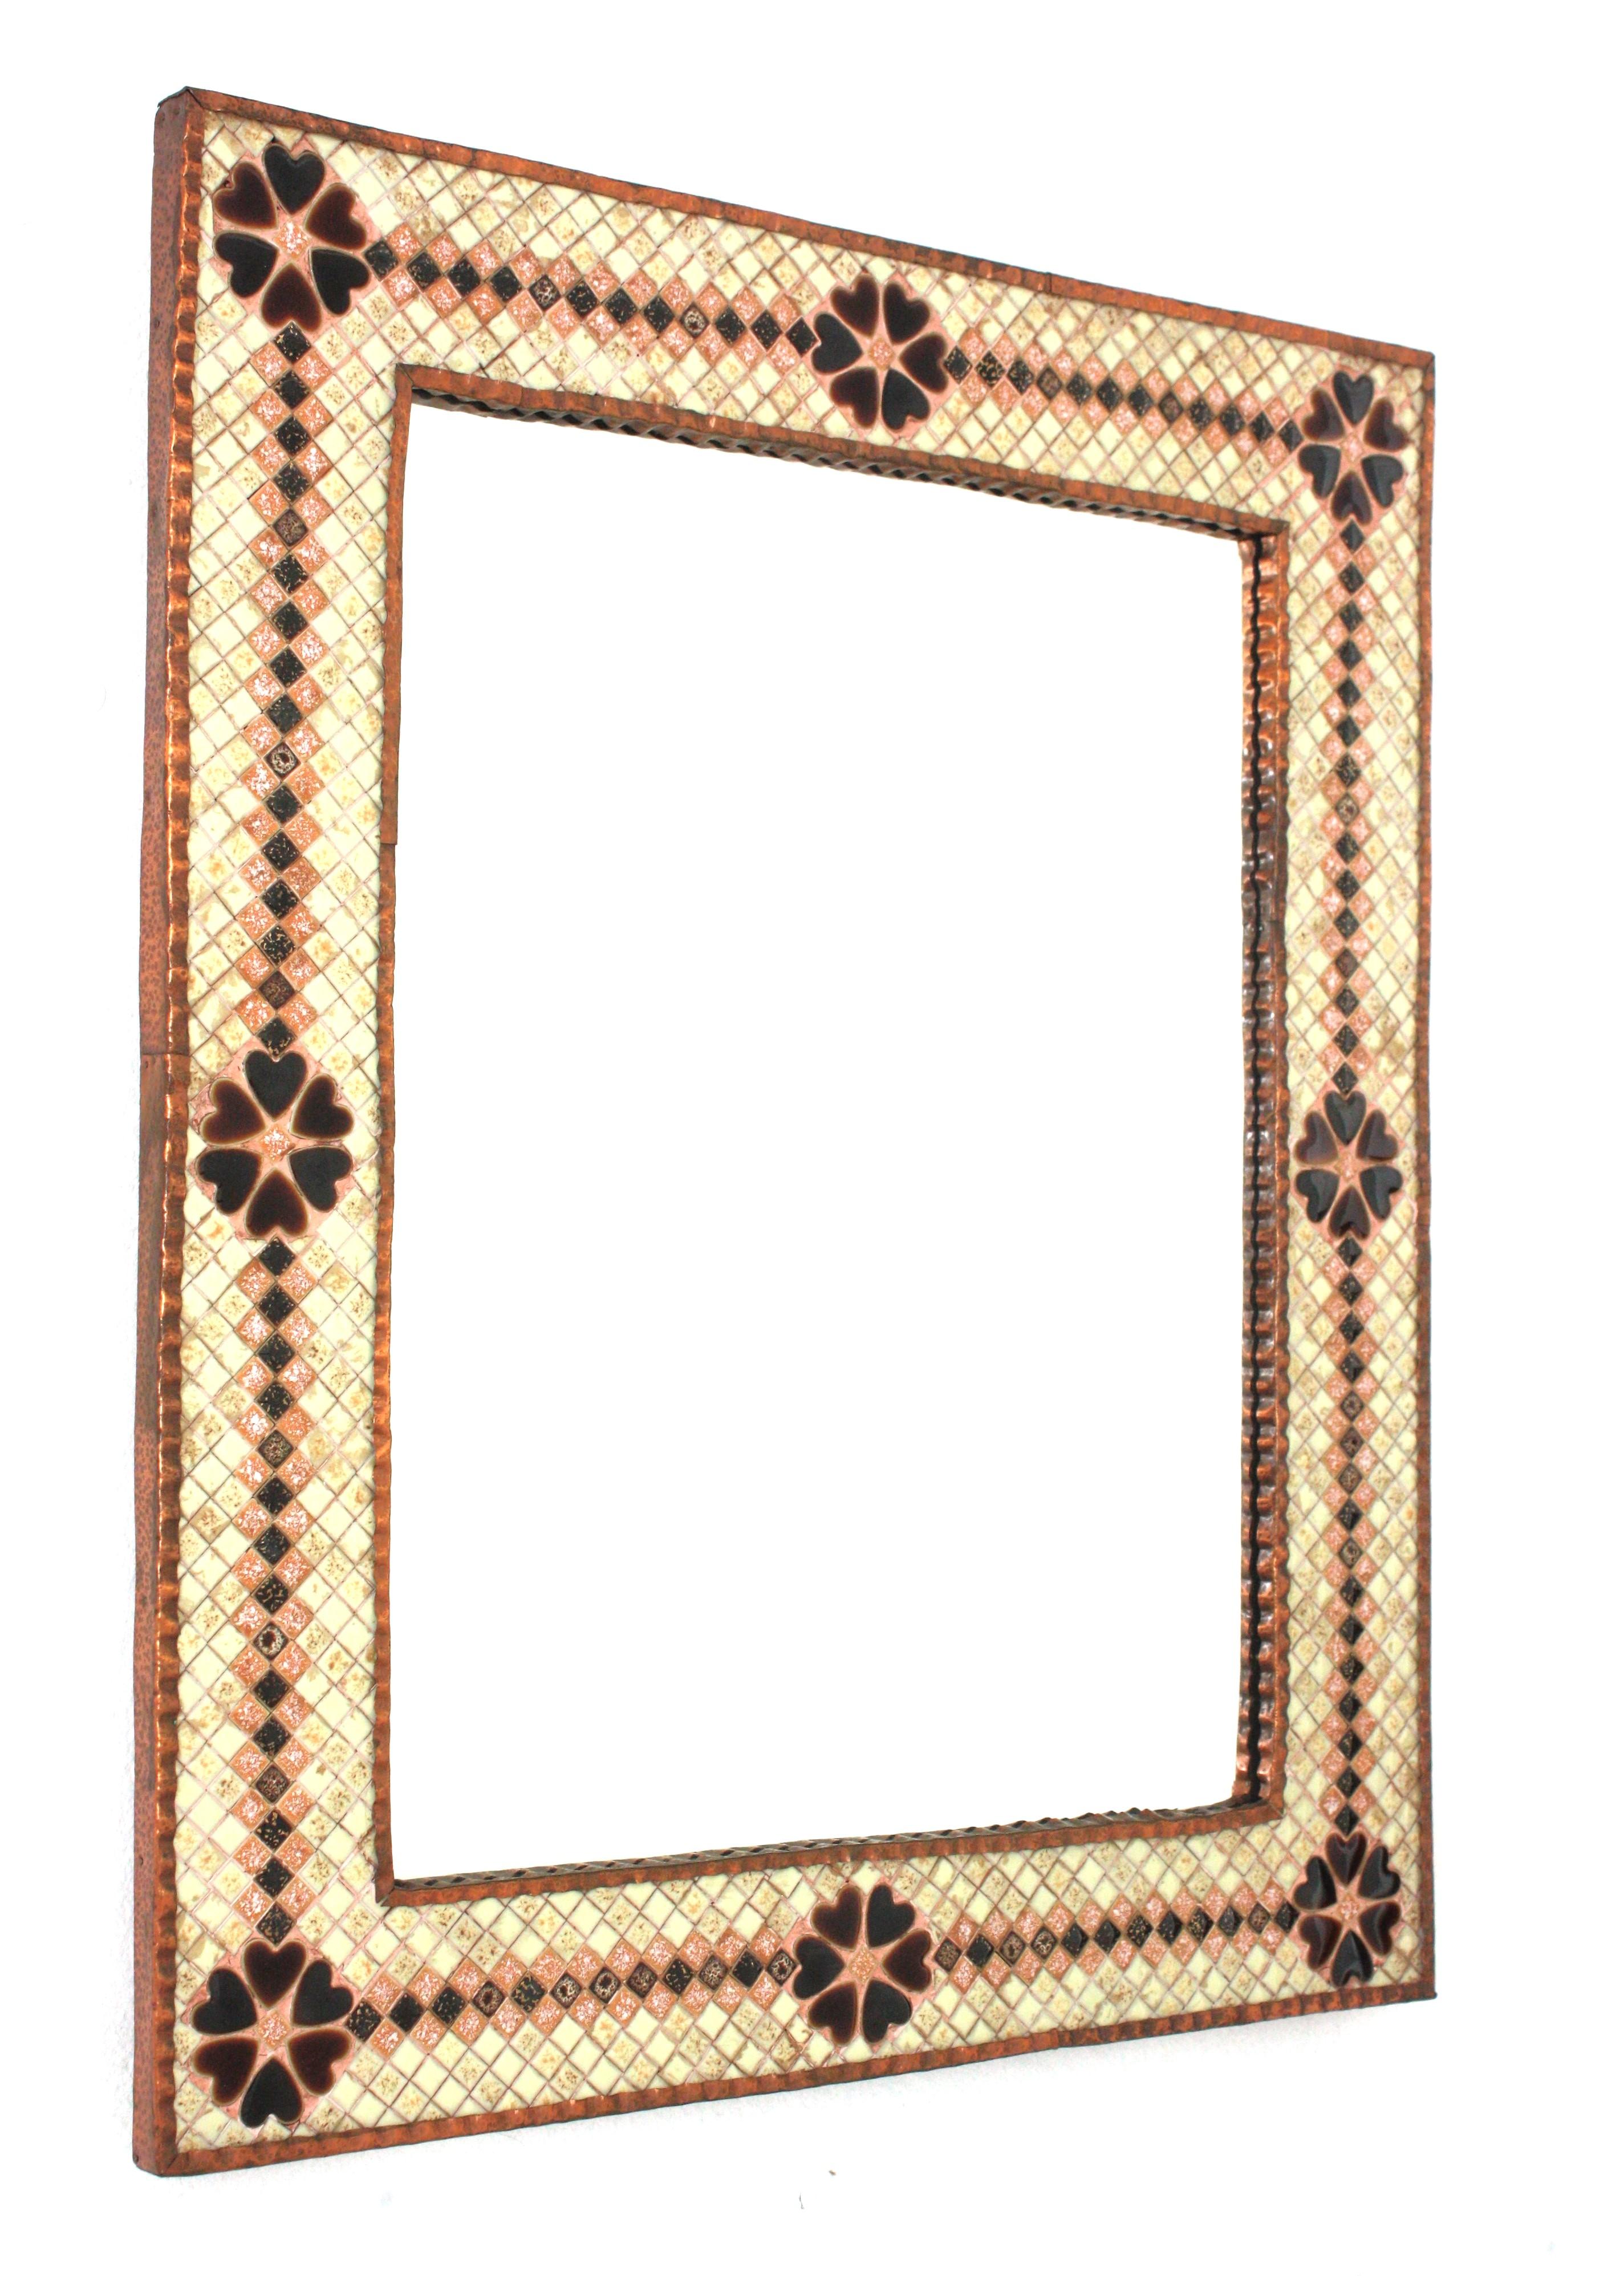 Mid-Century Modern Spanish Tile Mosaic Rectangular Mirror in Glazed Ceramic, 1950s For Sale